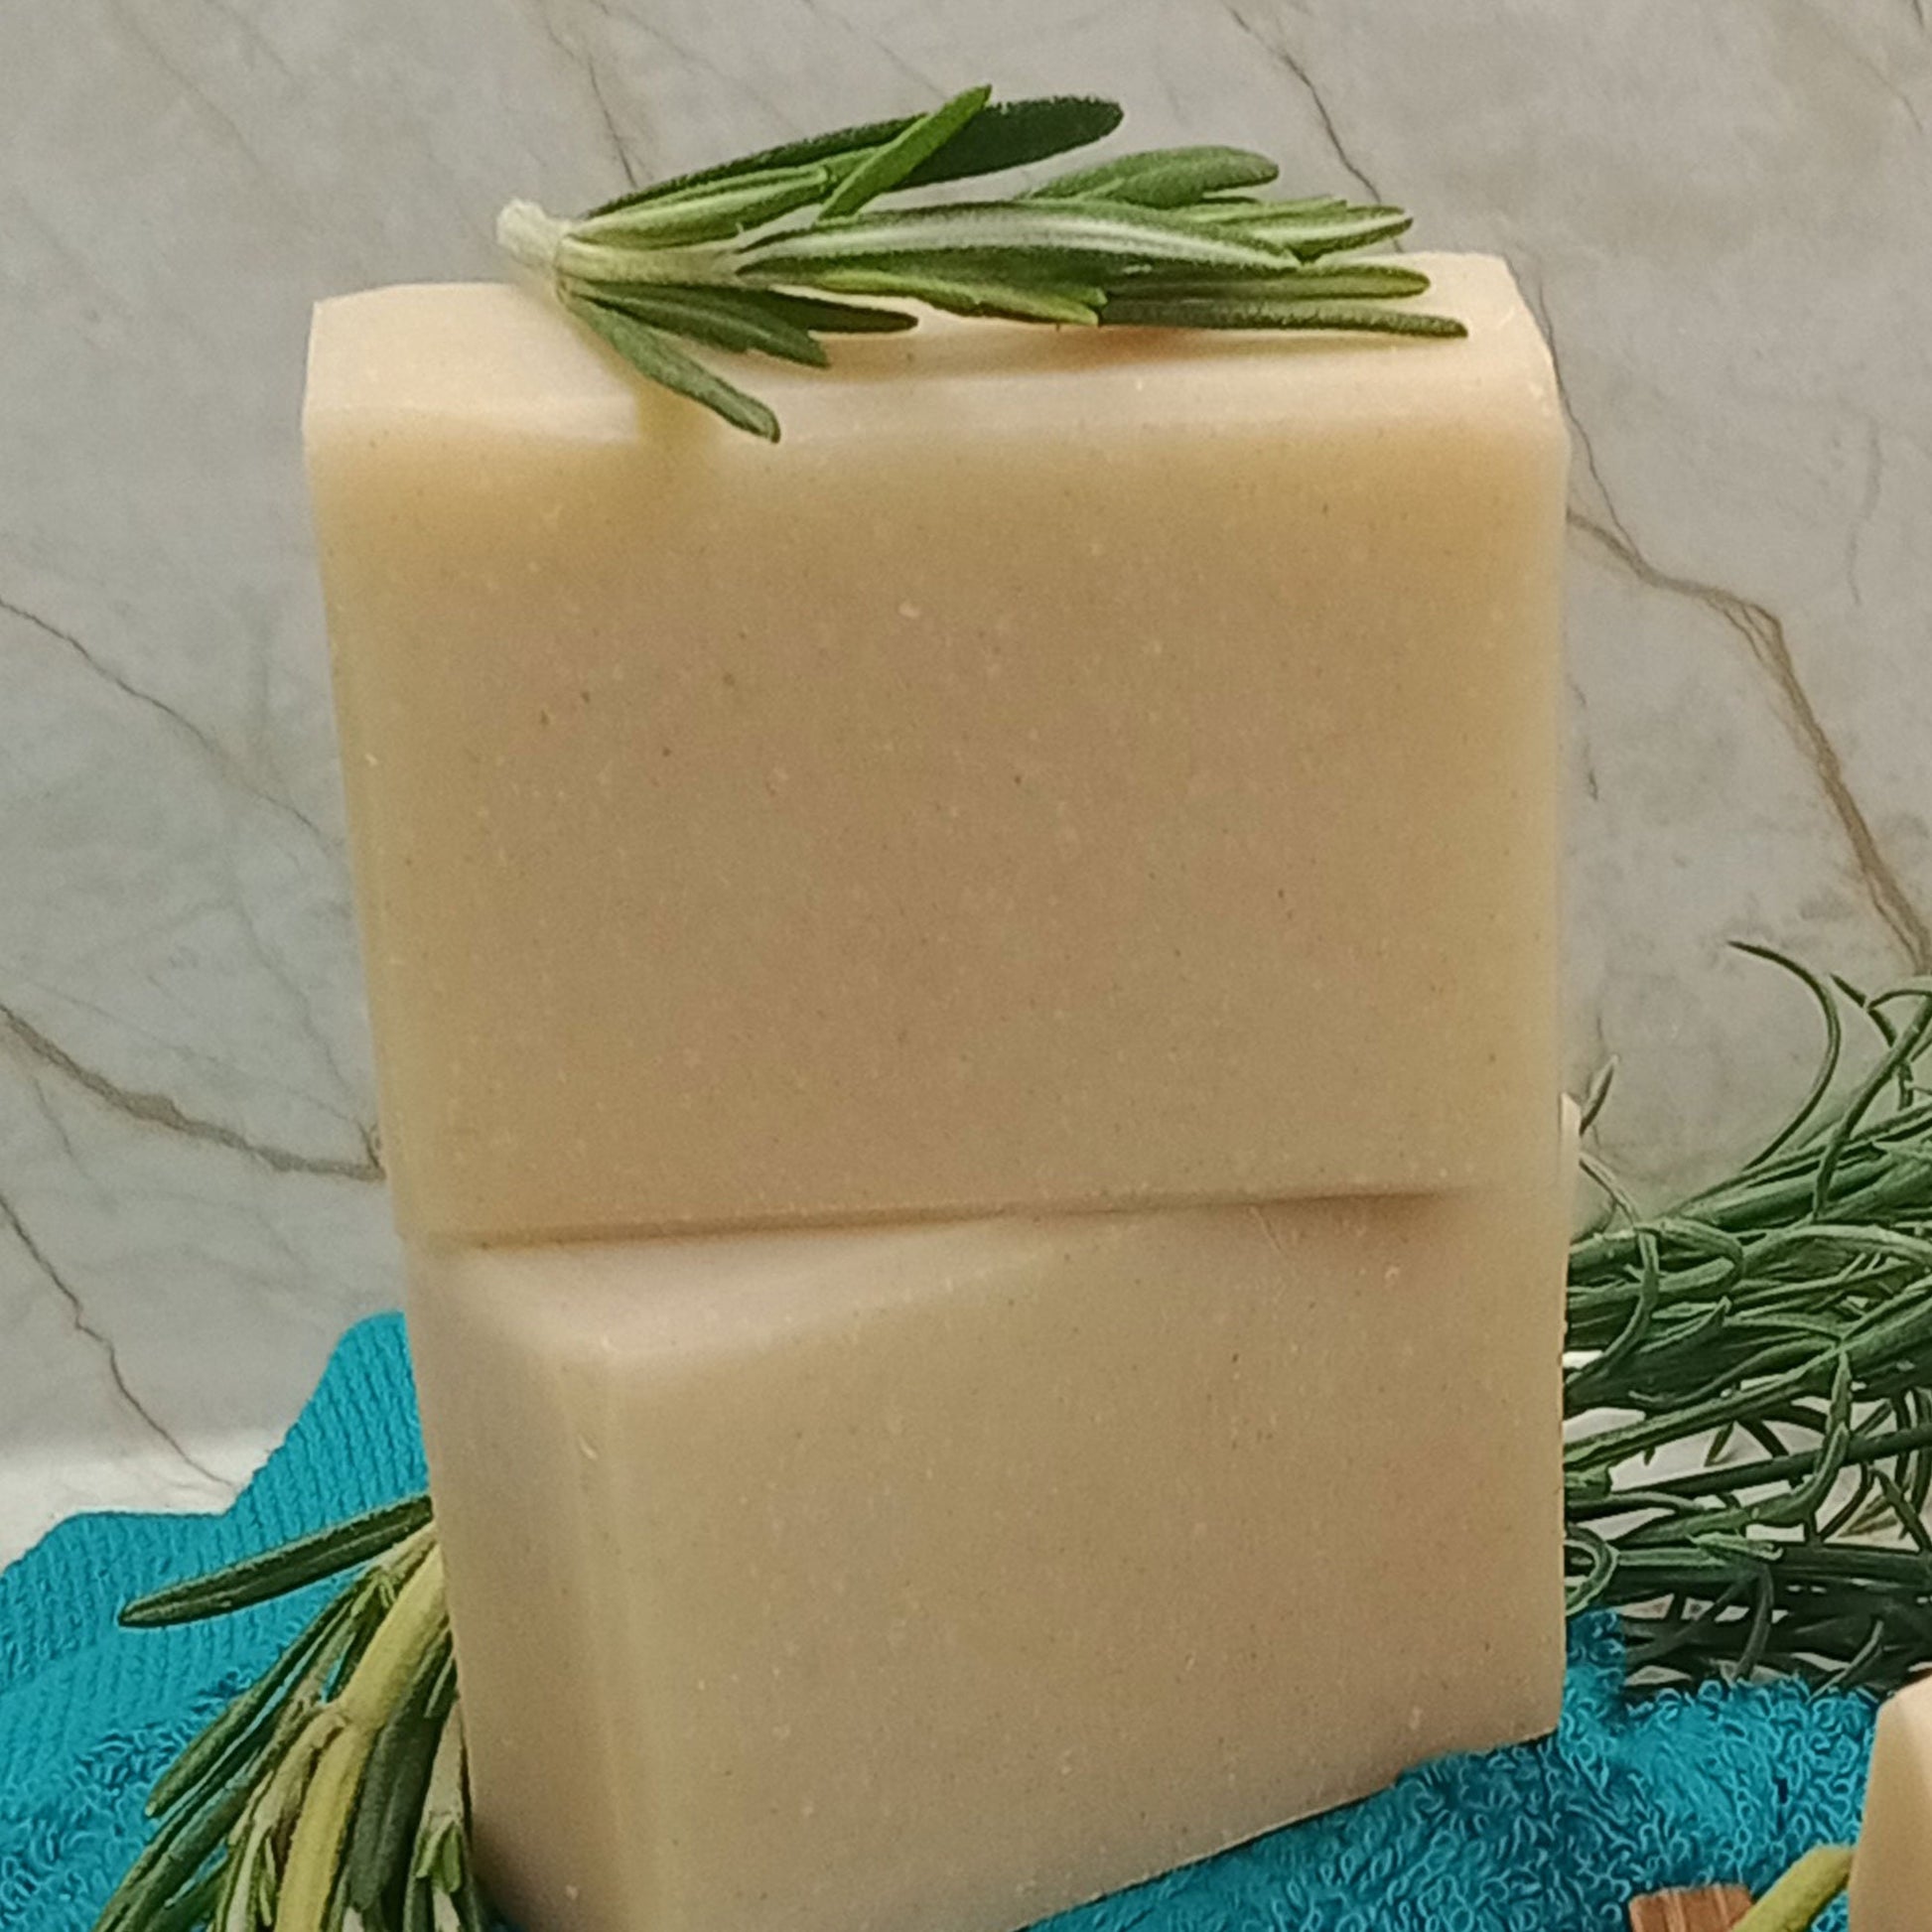 Rosemary and Lavender Handmade Bar Soap